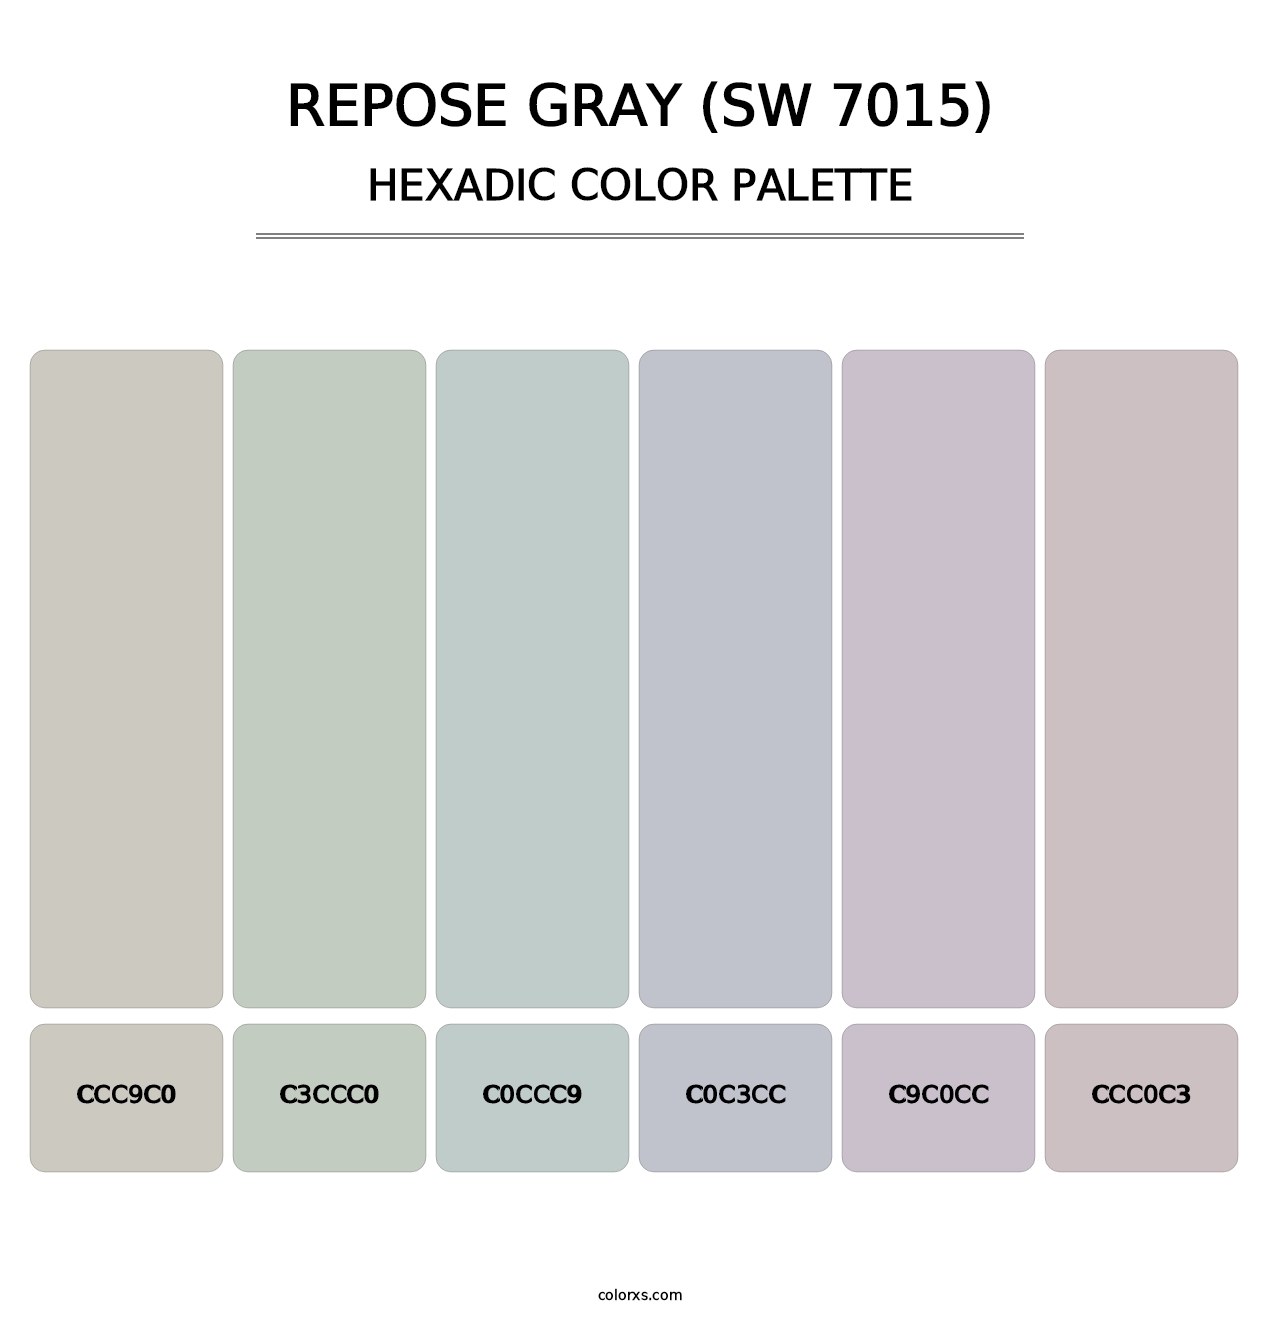 Repose Gray (SW 7015) - Hexadic Color Palette